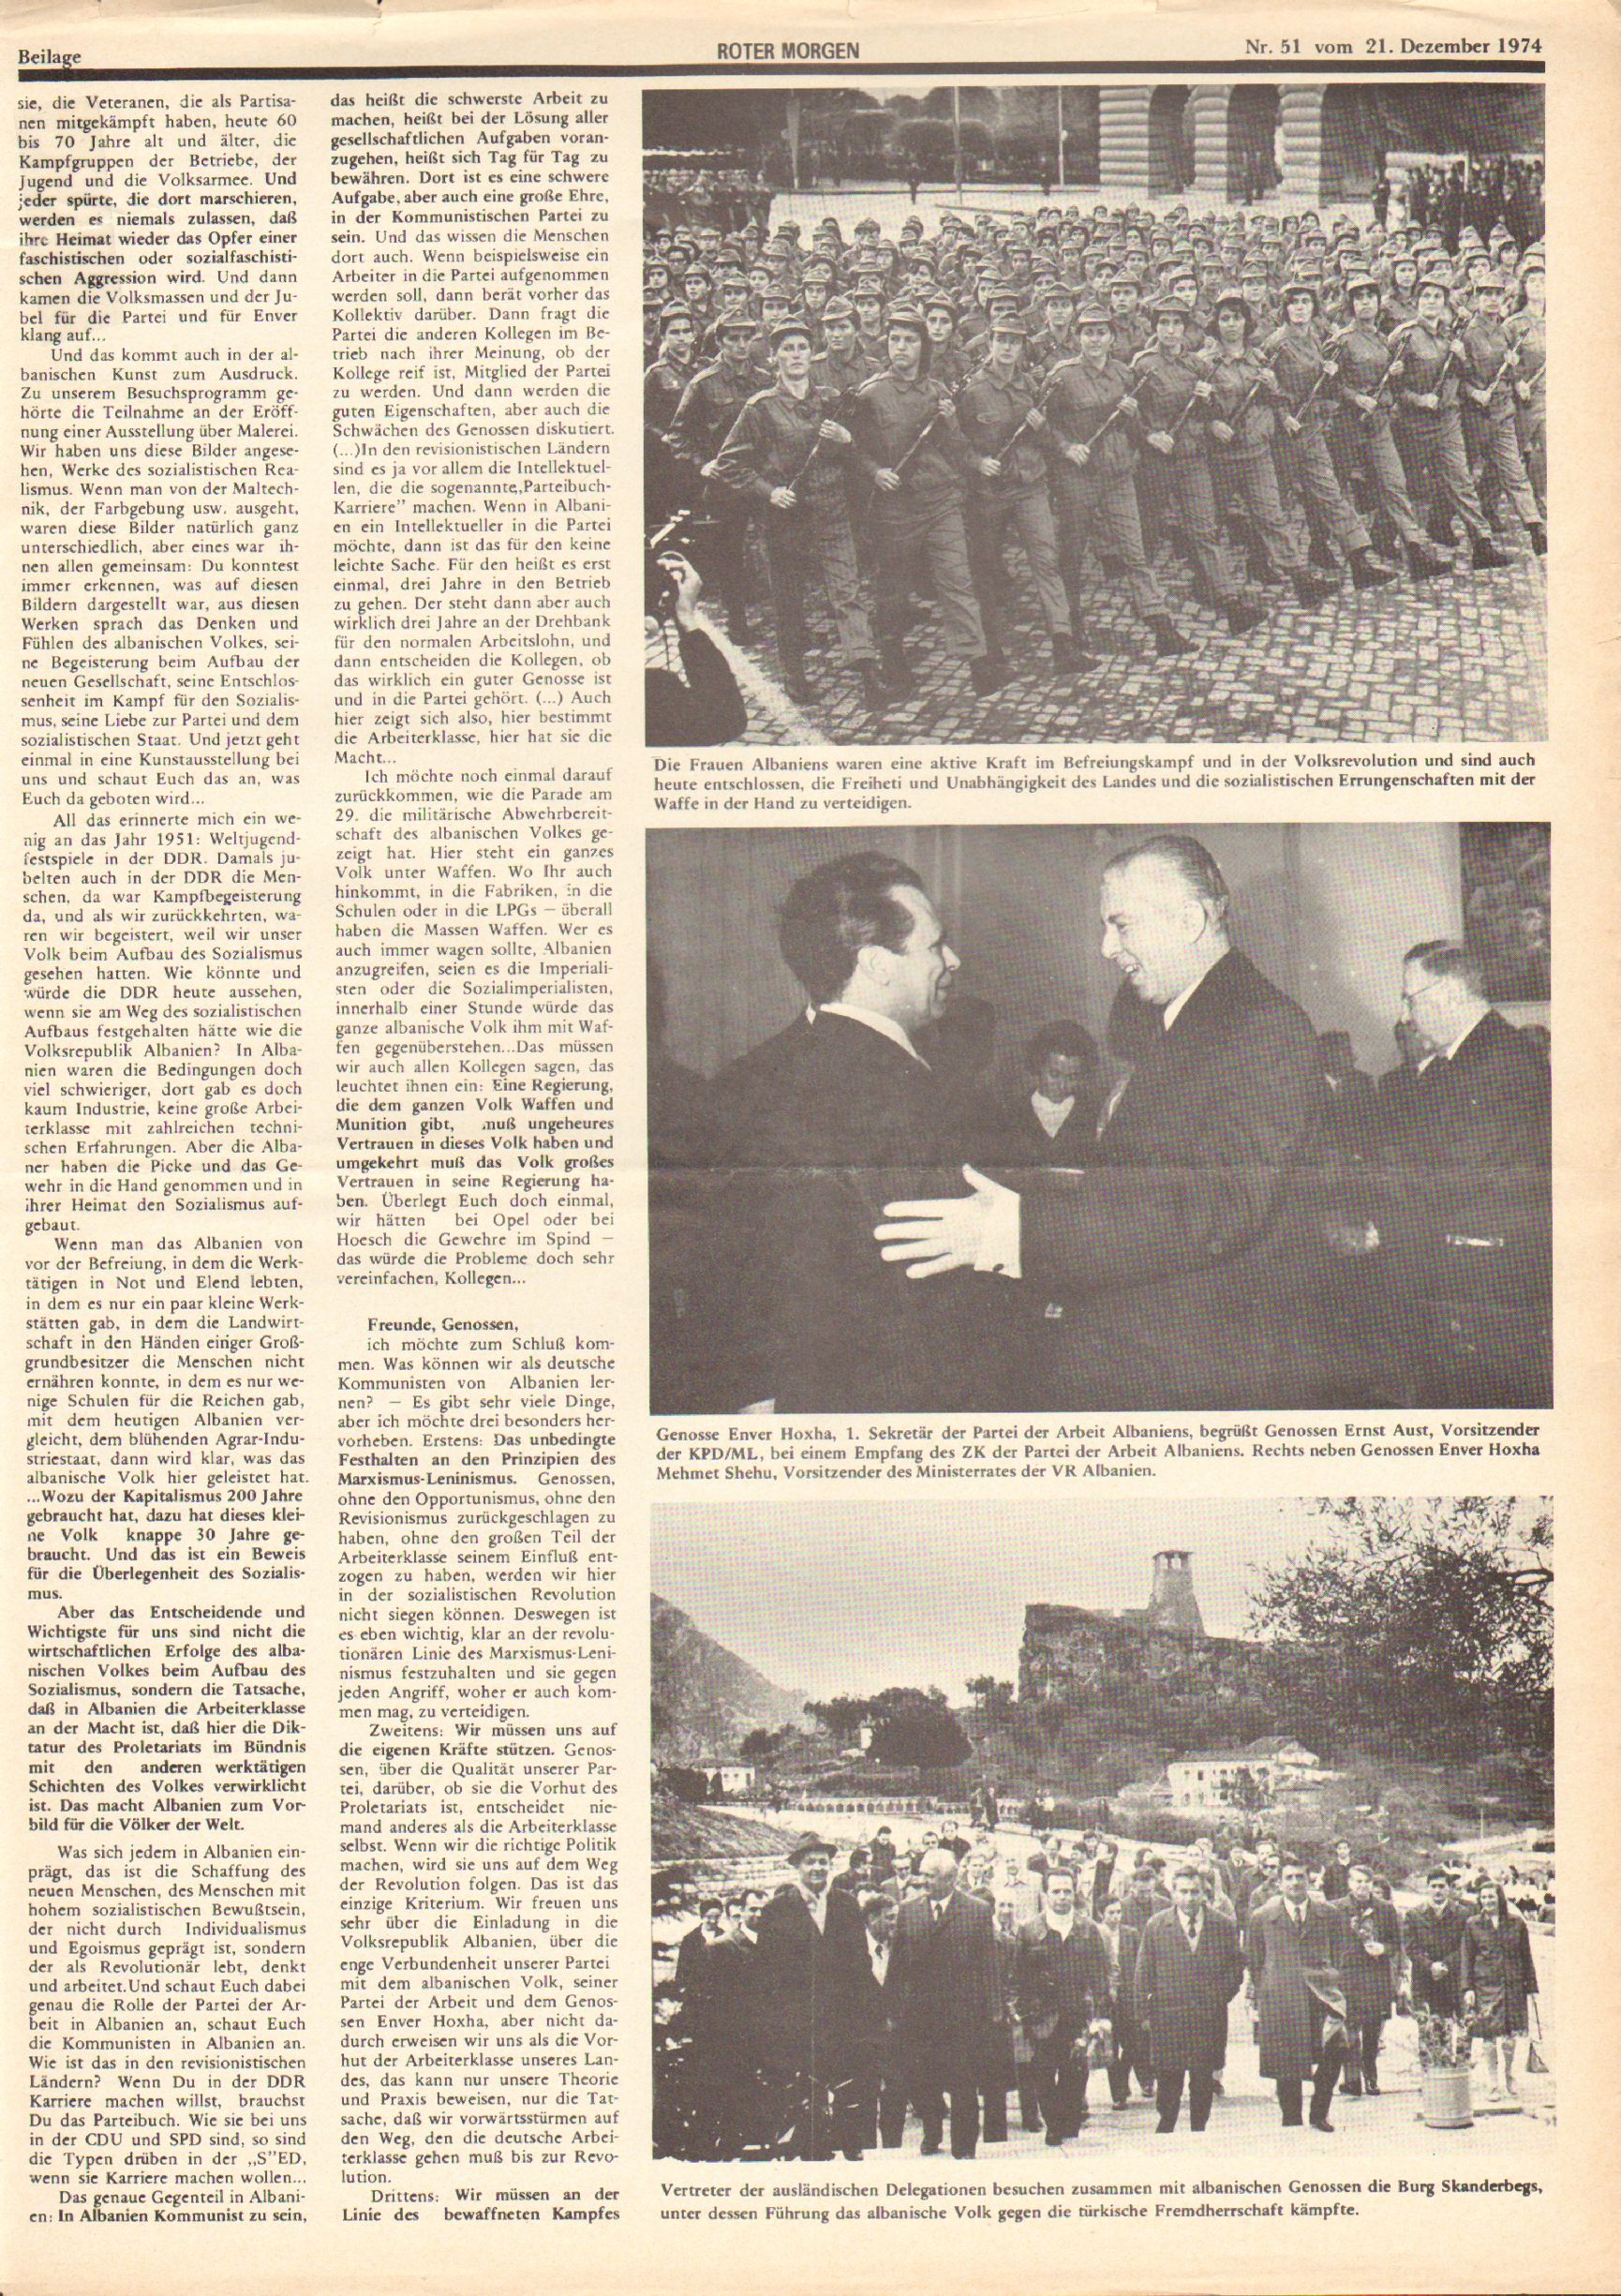 Roter Morgen, 8. Jg., 21. Dezember 1974, Nr. 51, Seite 11